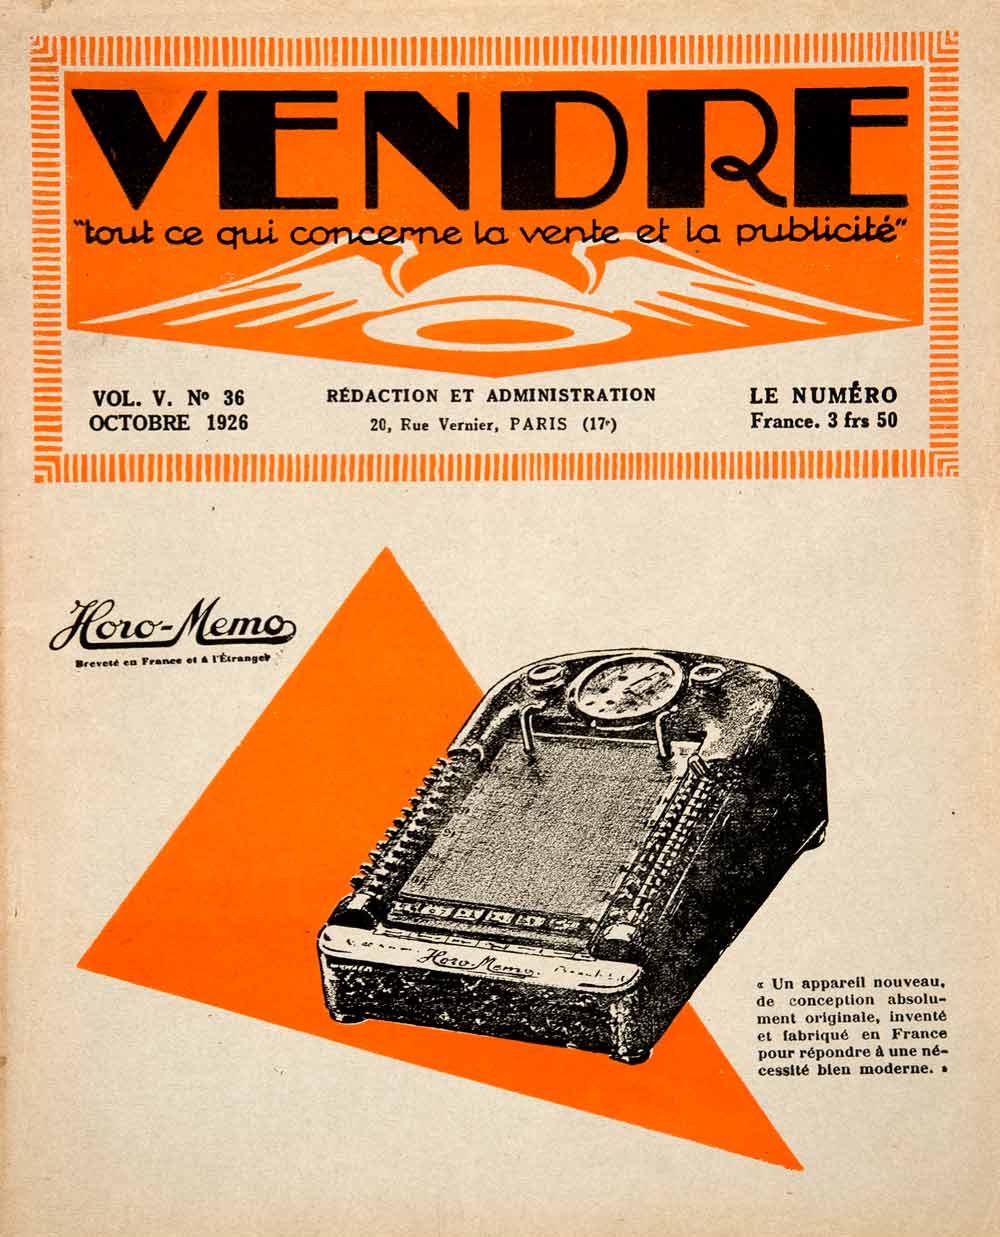 1926 Lithograph Cover Vendre Horo-Memo Alarm Clock Planner Datebook Helmet VEN4